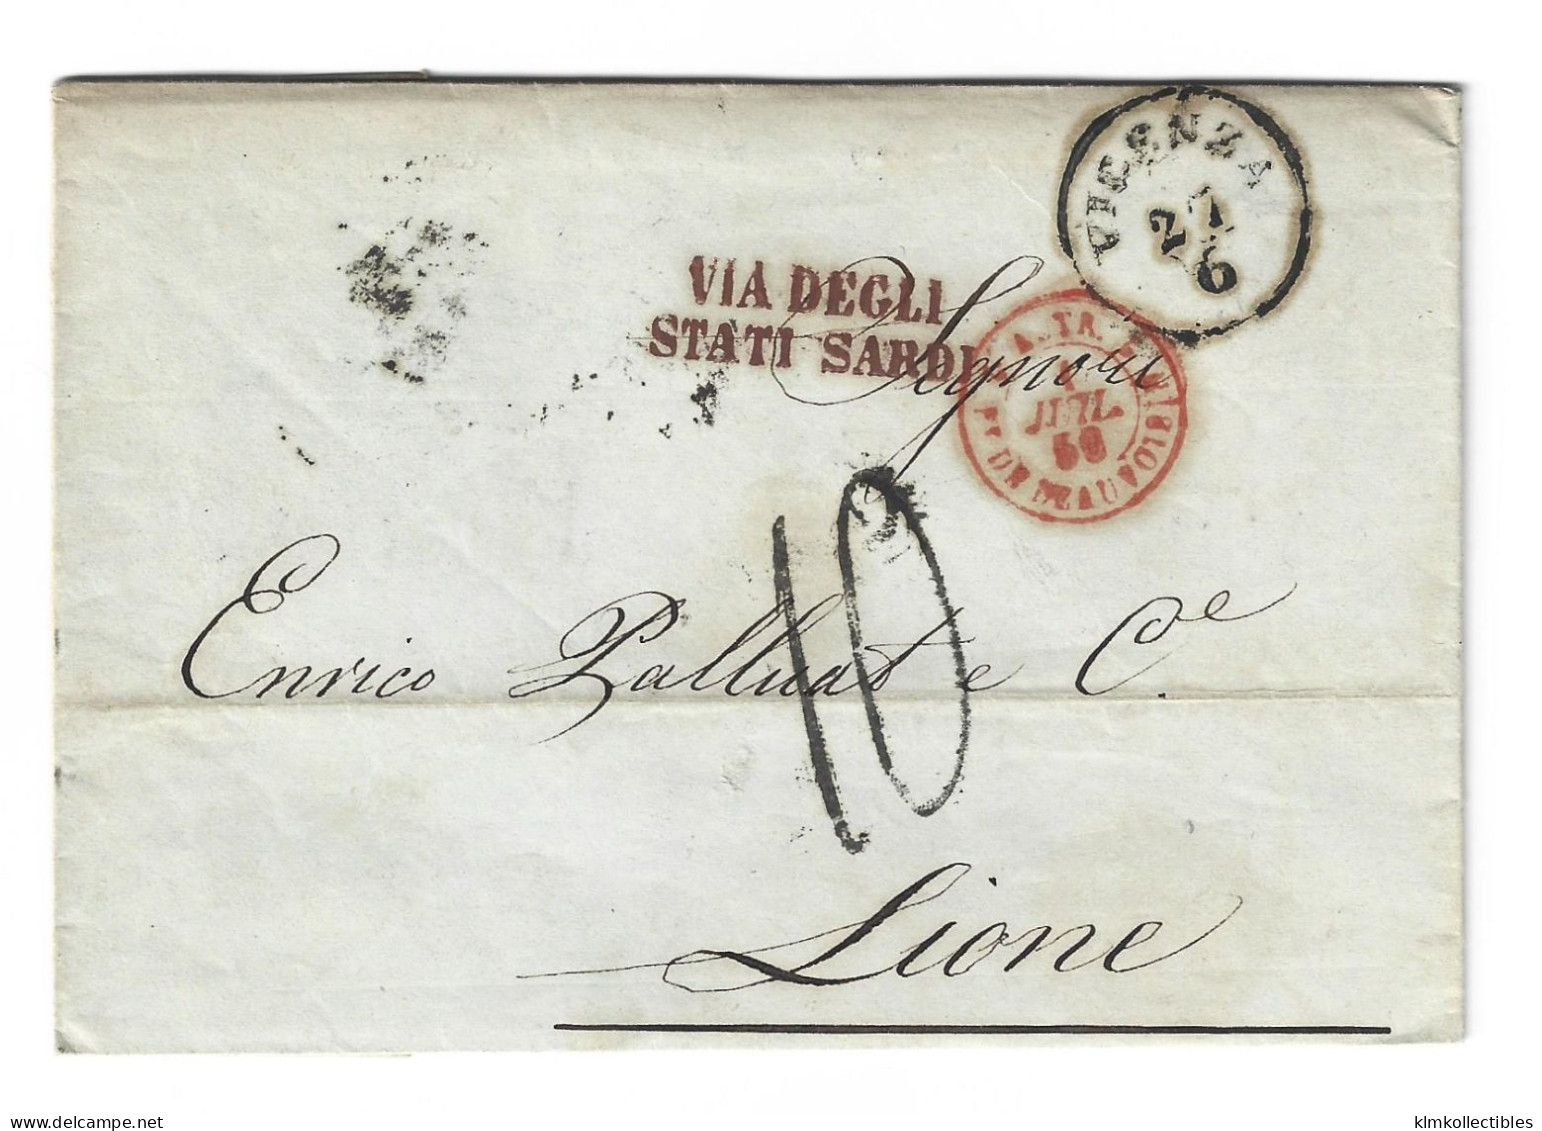 ITALY ITALIA - 1856 PIROSCAFI STAMPLESS LETTER TO FRANCE - VICENZA TO LYON - VIA DEGLI STATI SARDI CACHET - Unclassified